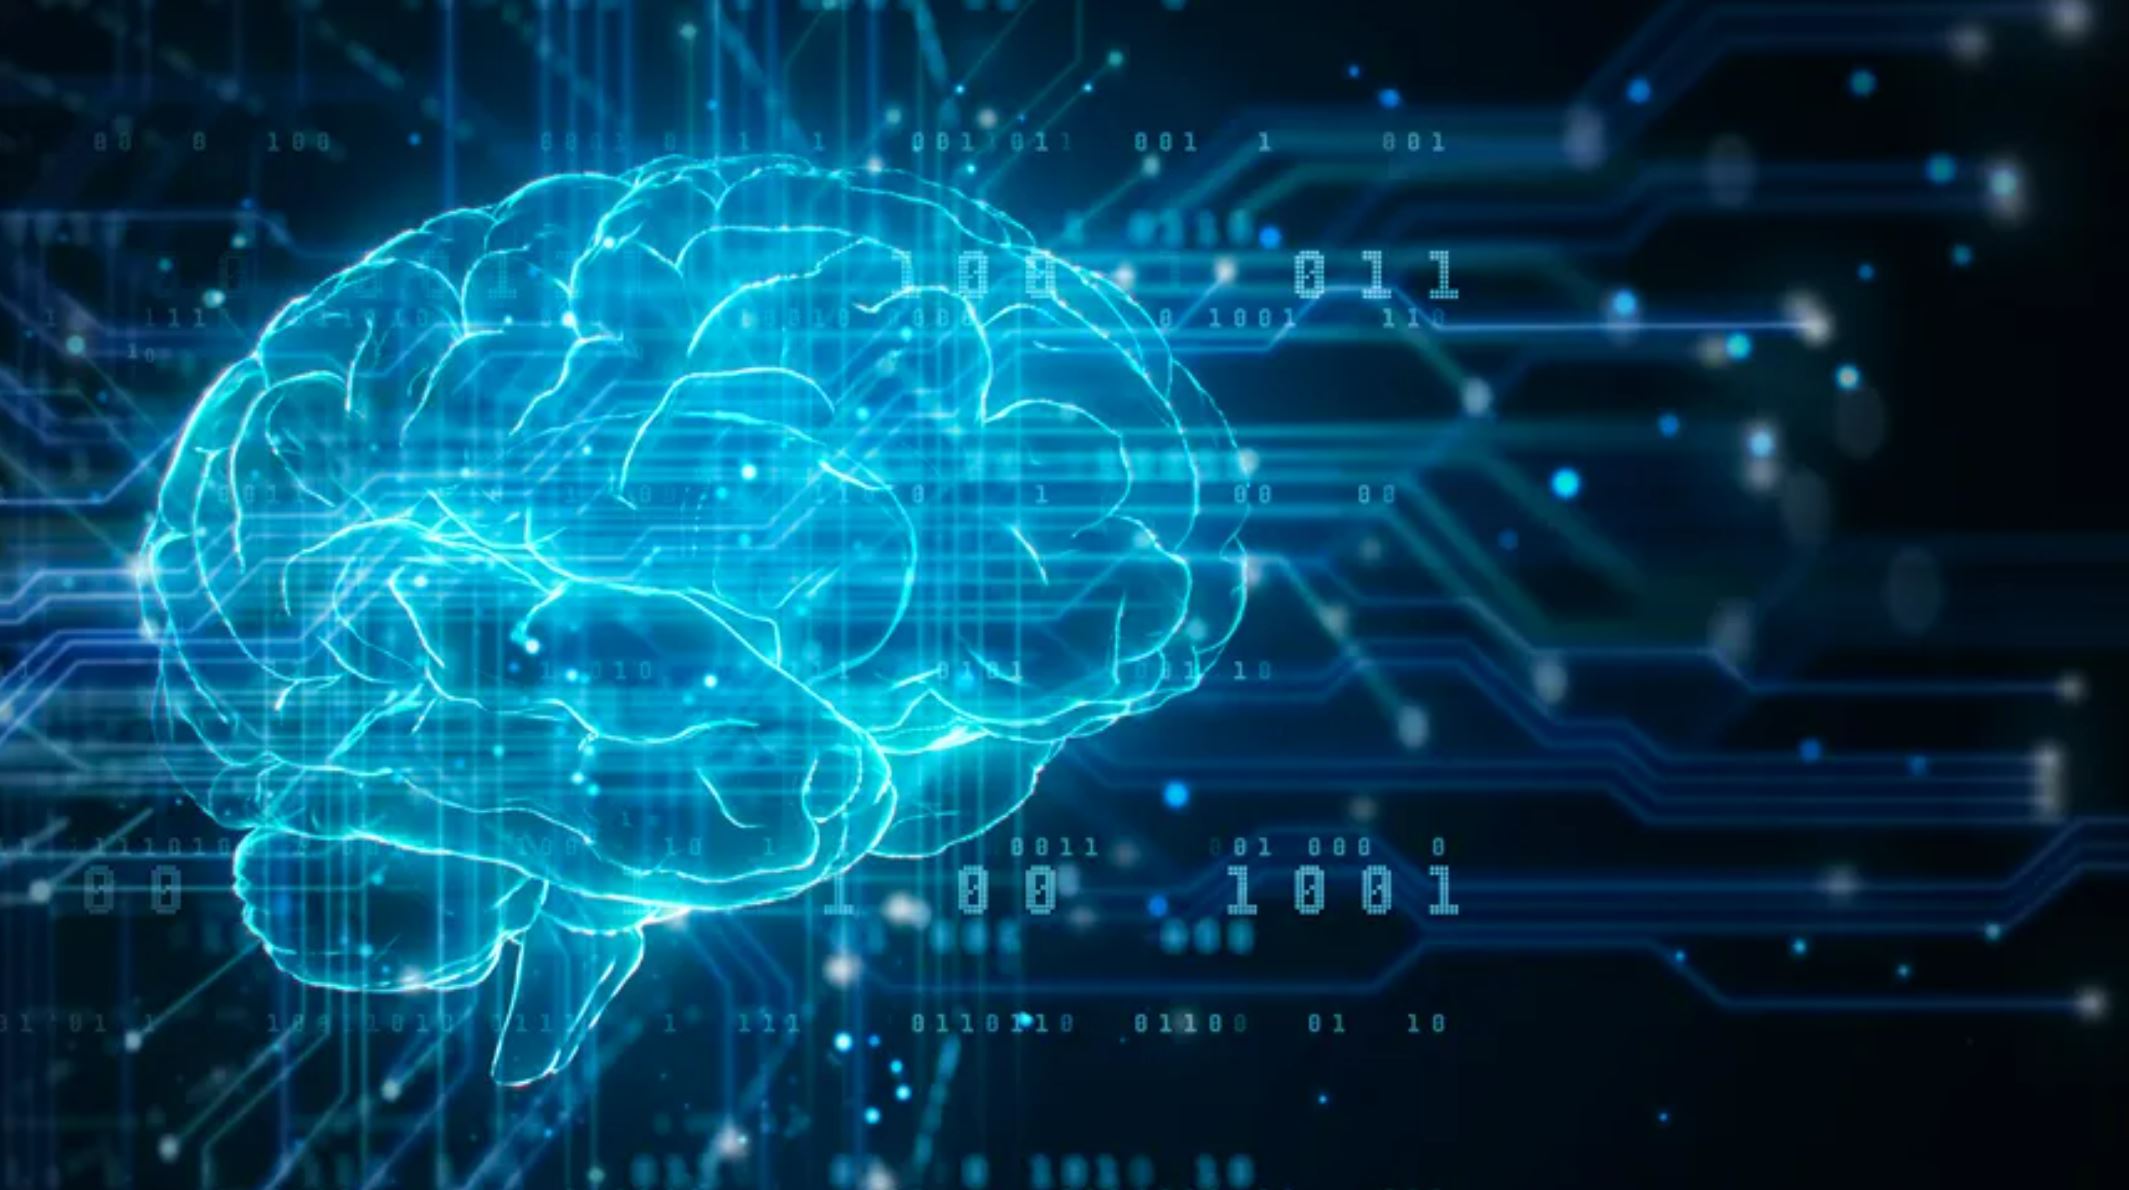 Meta برای پیشرفت دادن هوش مصنوعی خود در حال تحقیق بر روی مغز انسان است.